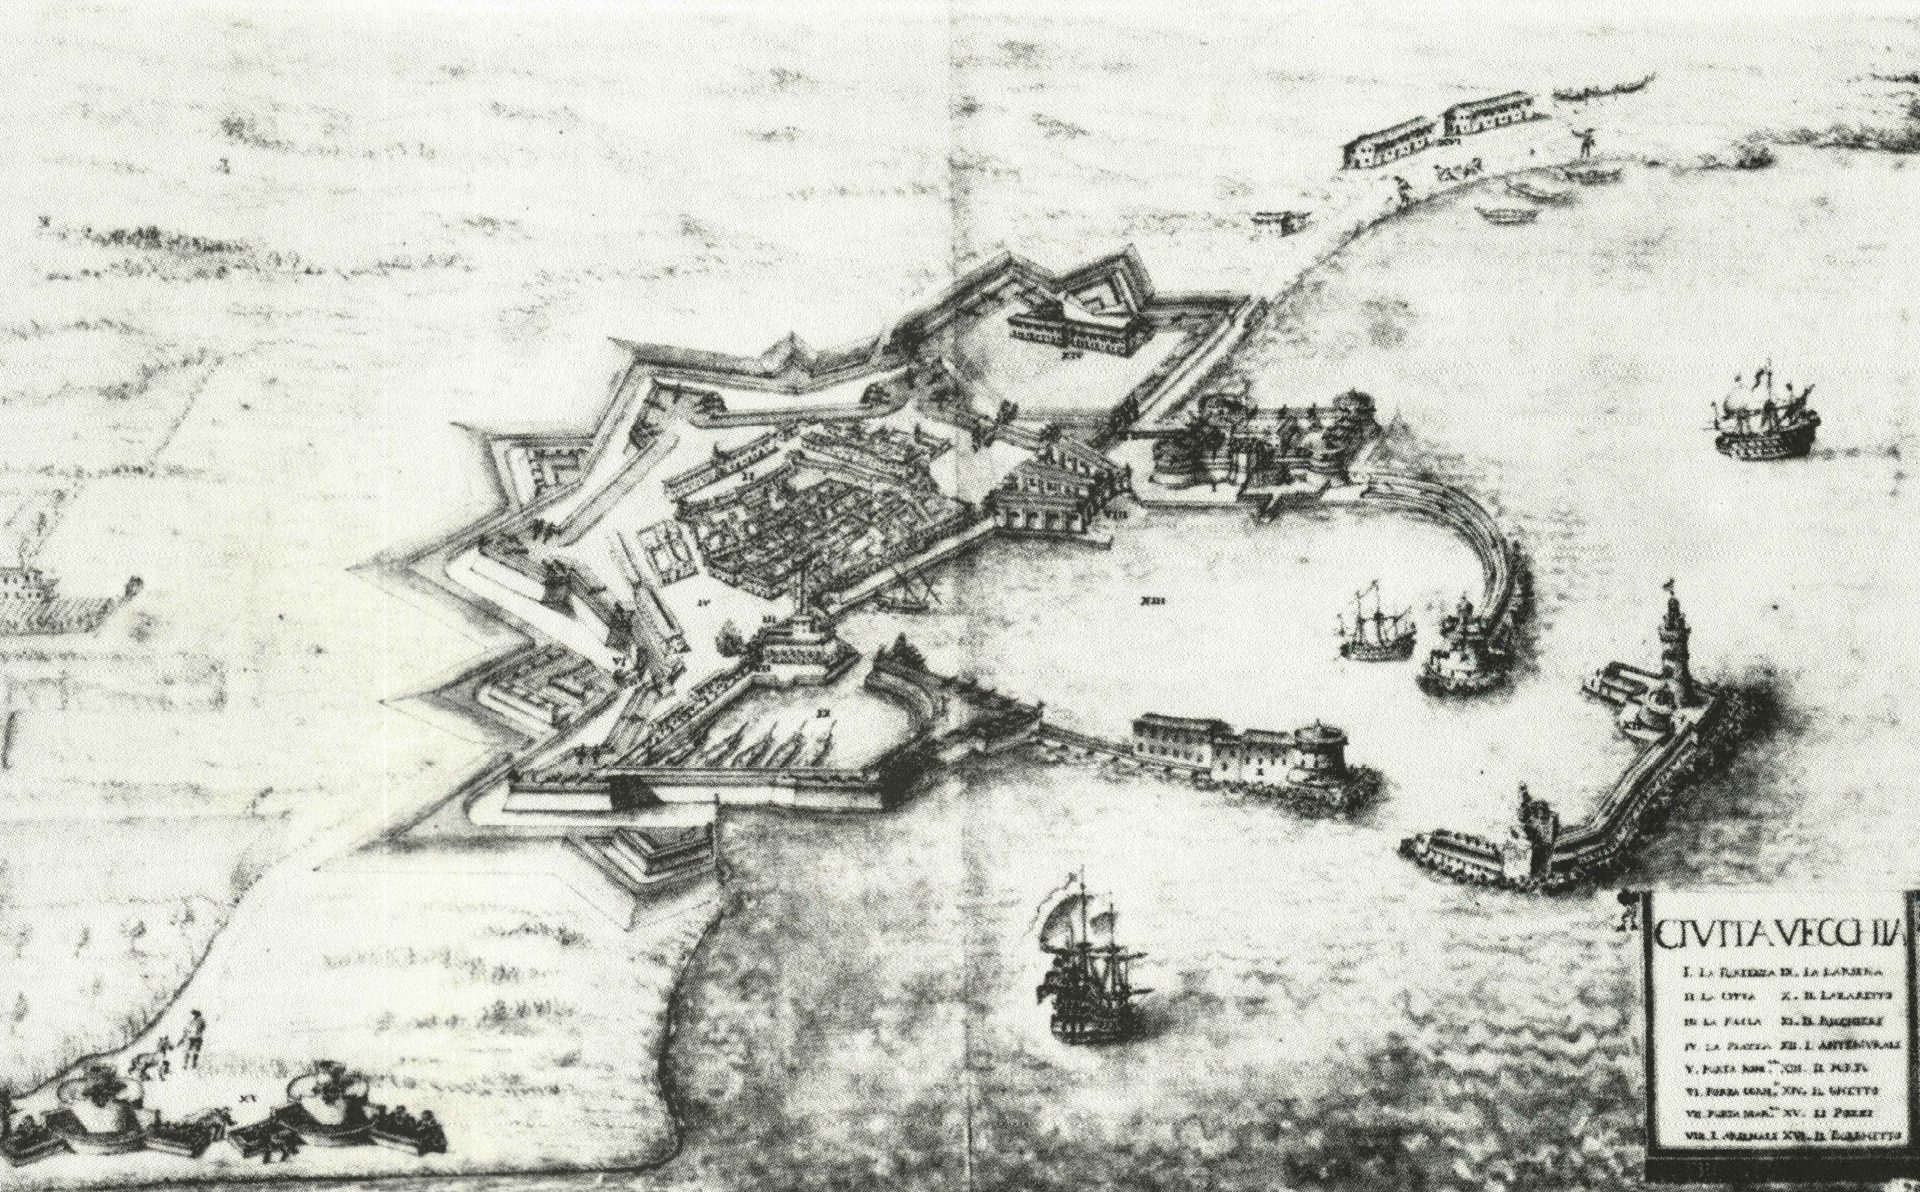 The port of Civitavecchia (Centumcellae) in the 17th century (Biblioteca Apostolica Vaticana).